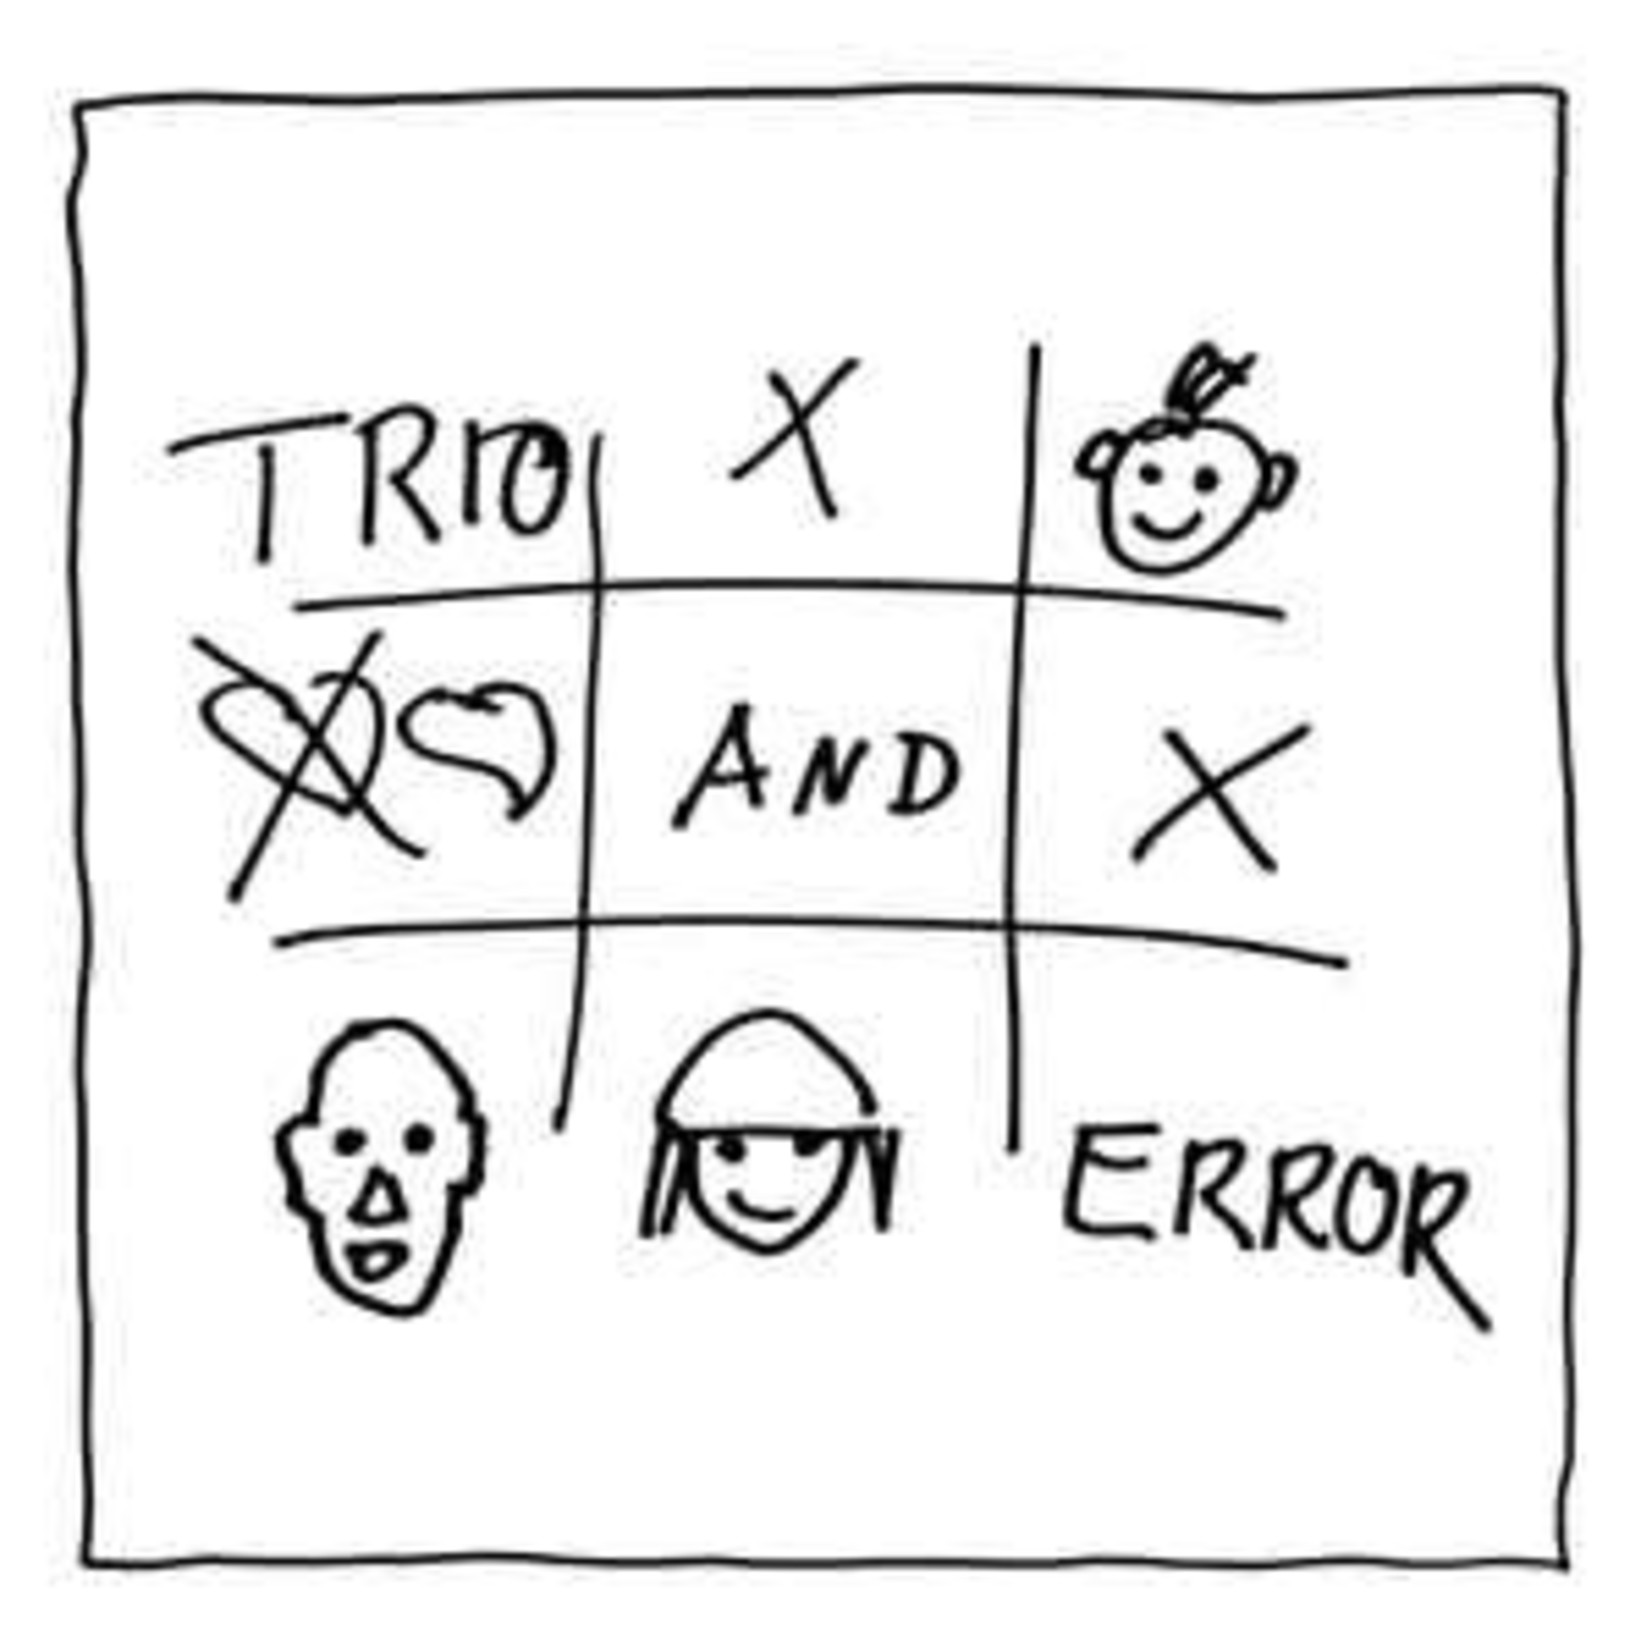 [Discontinued] Trio - Trio and Error